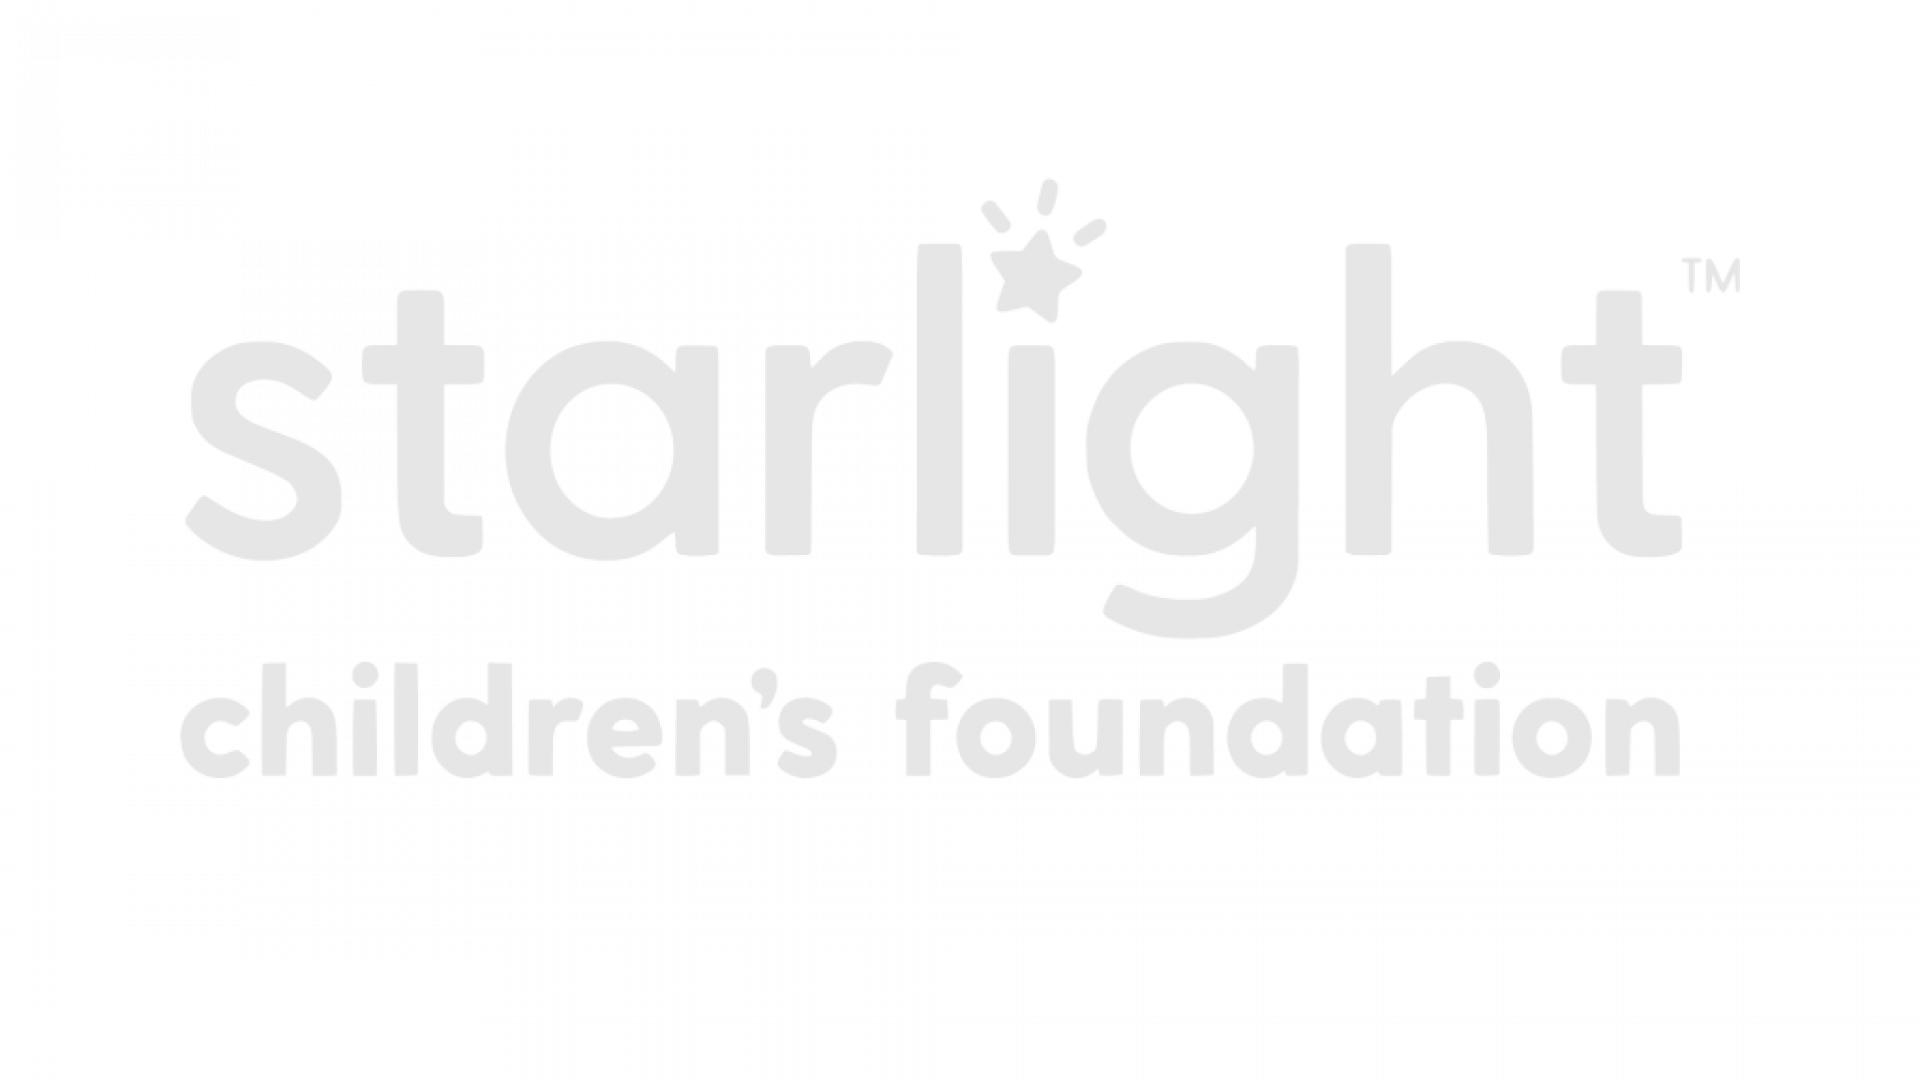 web charity logos - all white_starlight